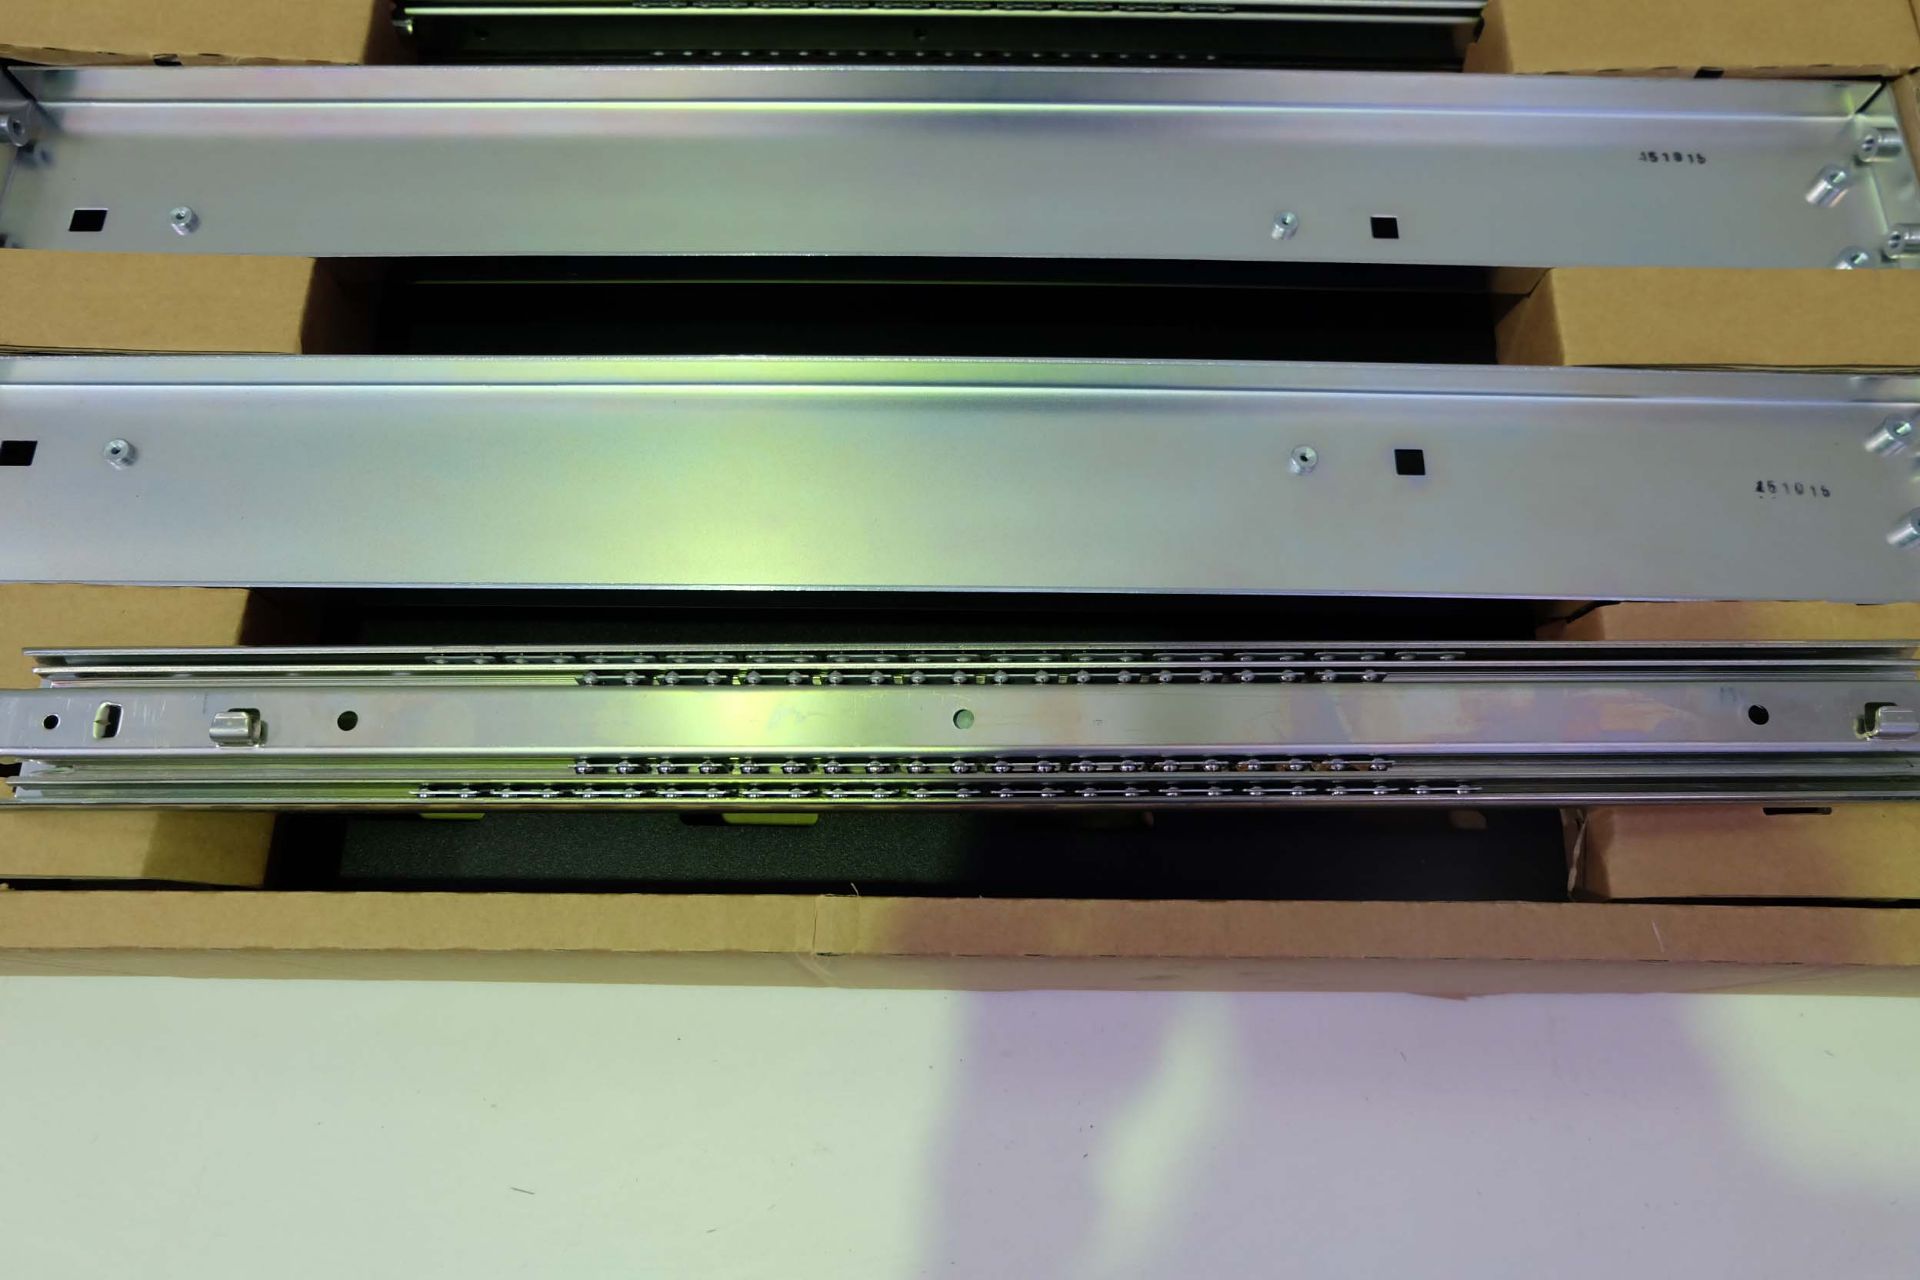 Hewlett Packard 100Kg Sliding Shelf Kit Width 500mm. Length 600mm. As New In Box. - Image 4 of 6